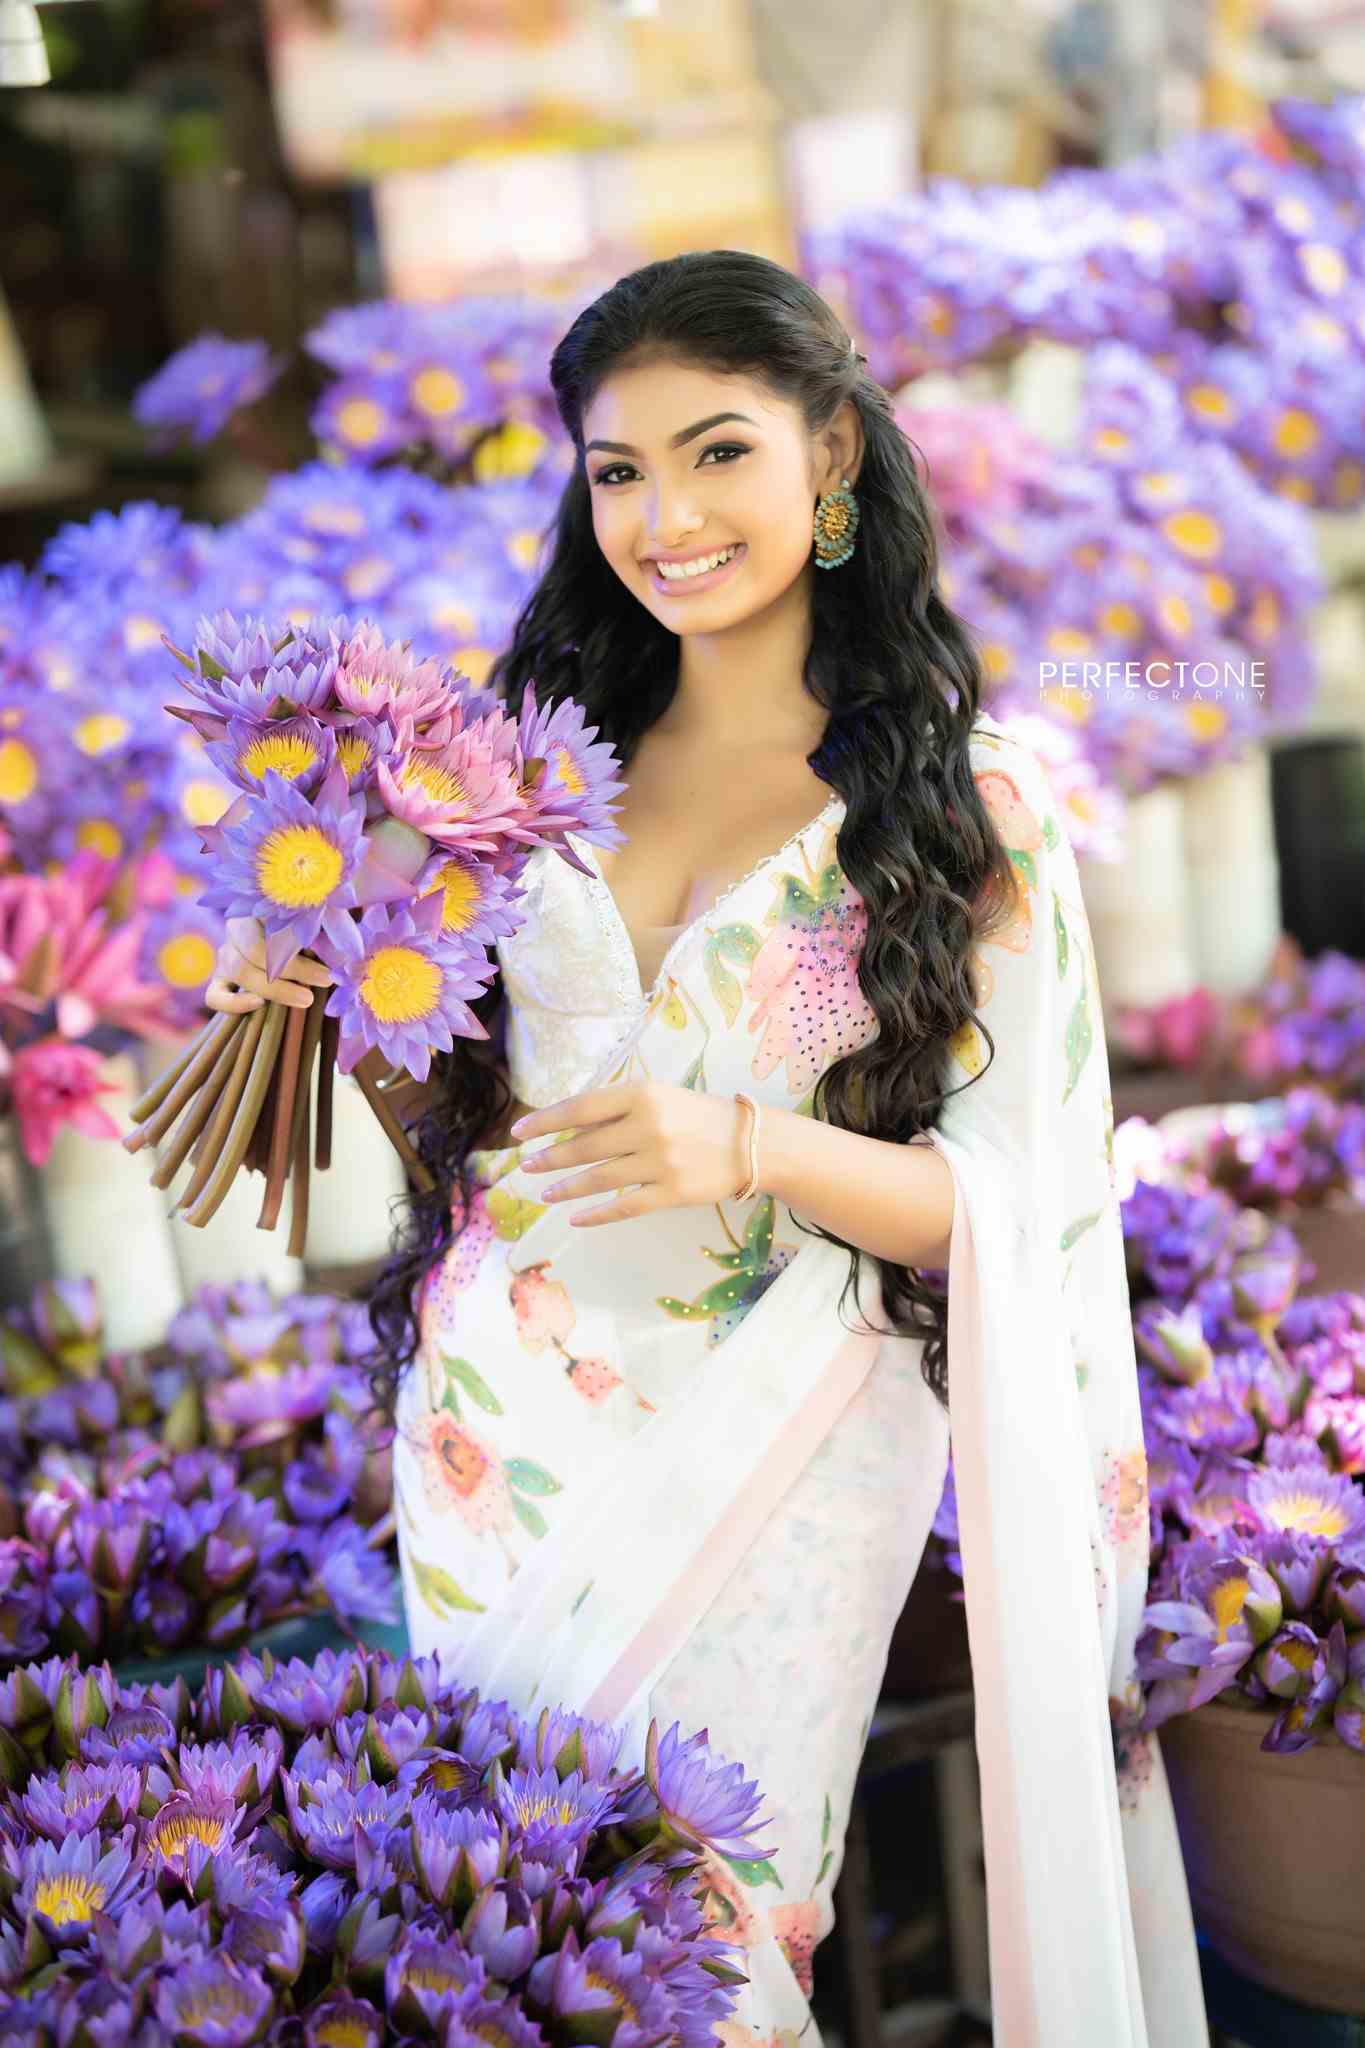 Suhandi Upethma Wosadi. Suhandi Wosadi Instagram downloads. Suhandi Upethma Wosadi Teledramas. 1990 teledrama Swarnawahini. Beautiful Girl with blue lilies. floral saree designs.